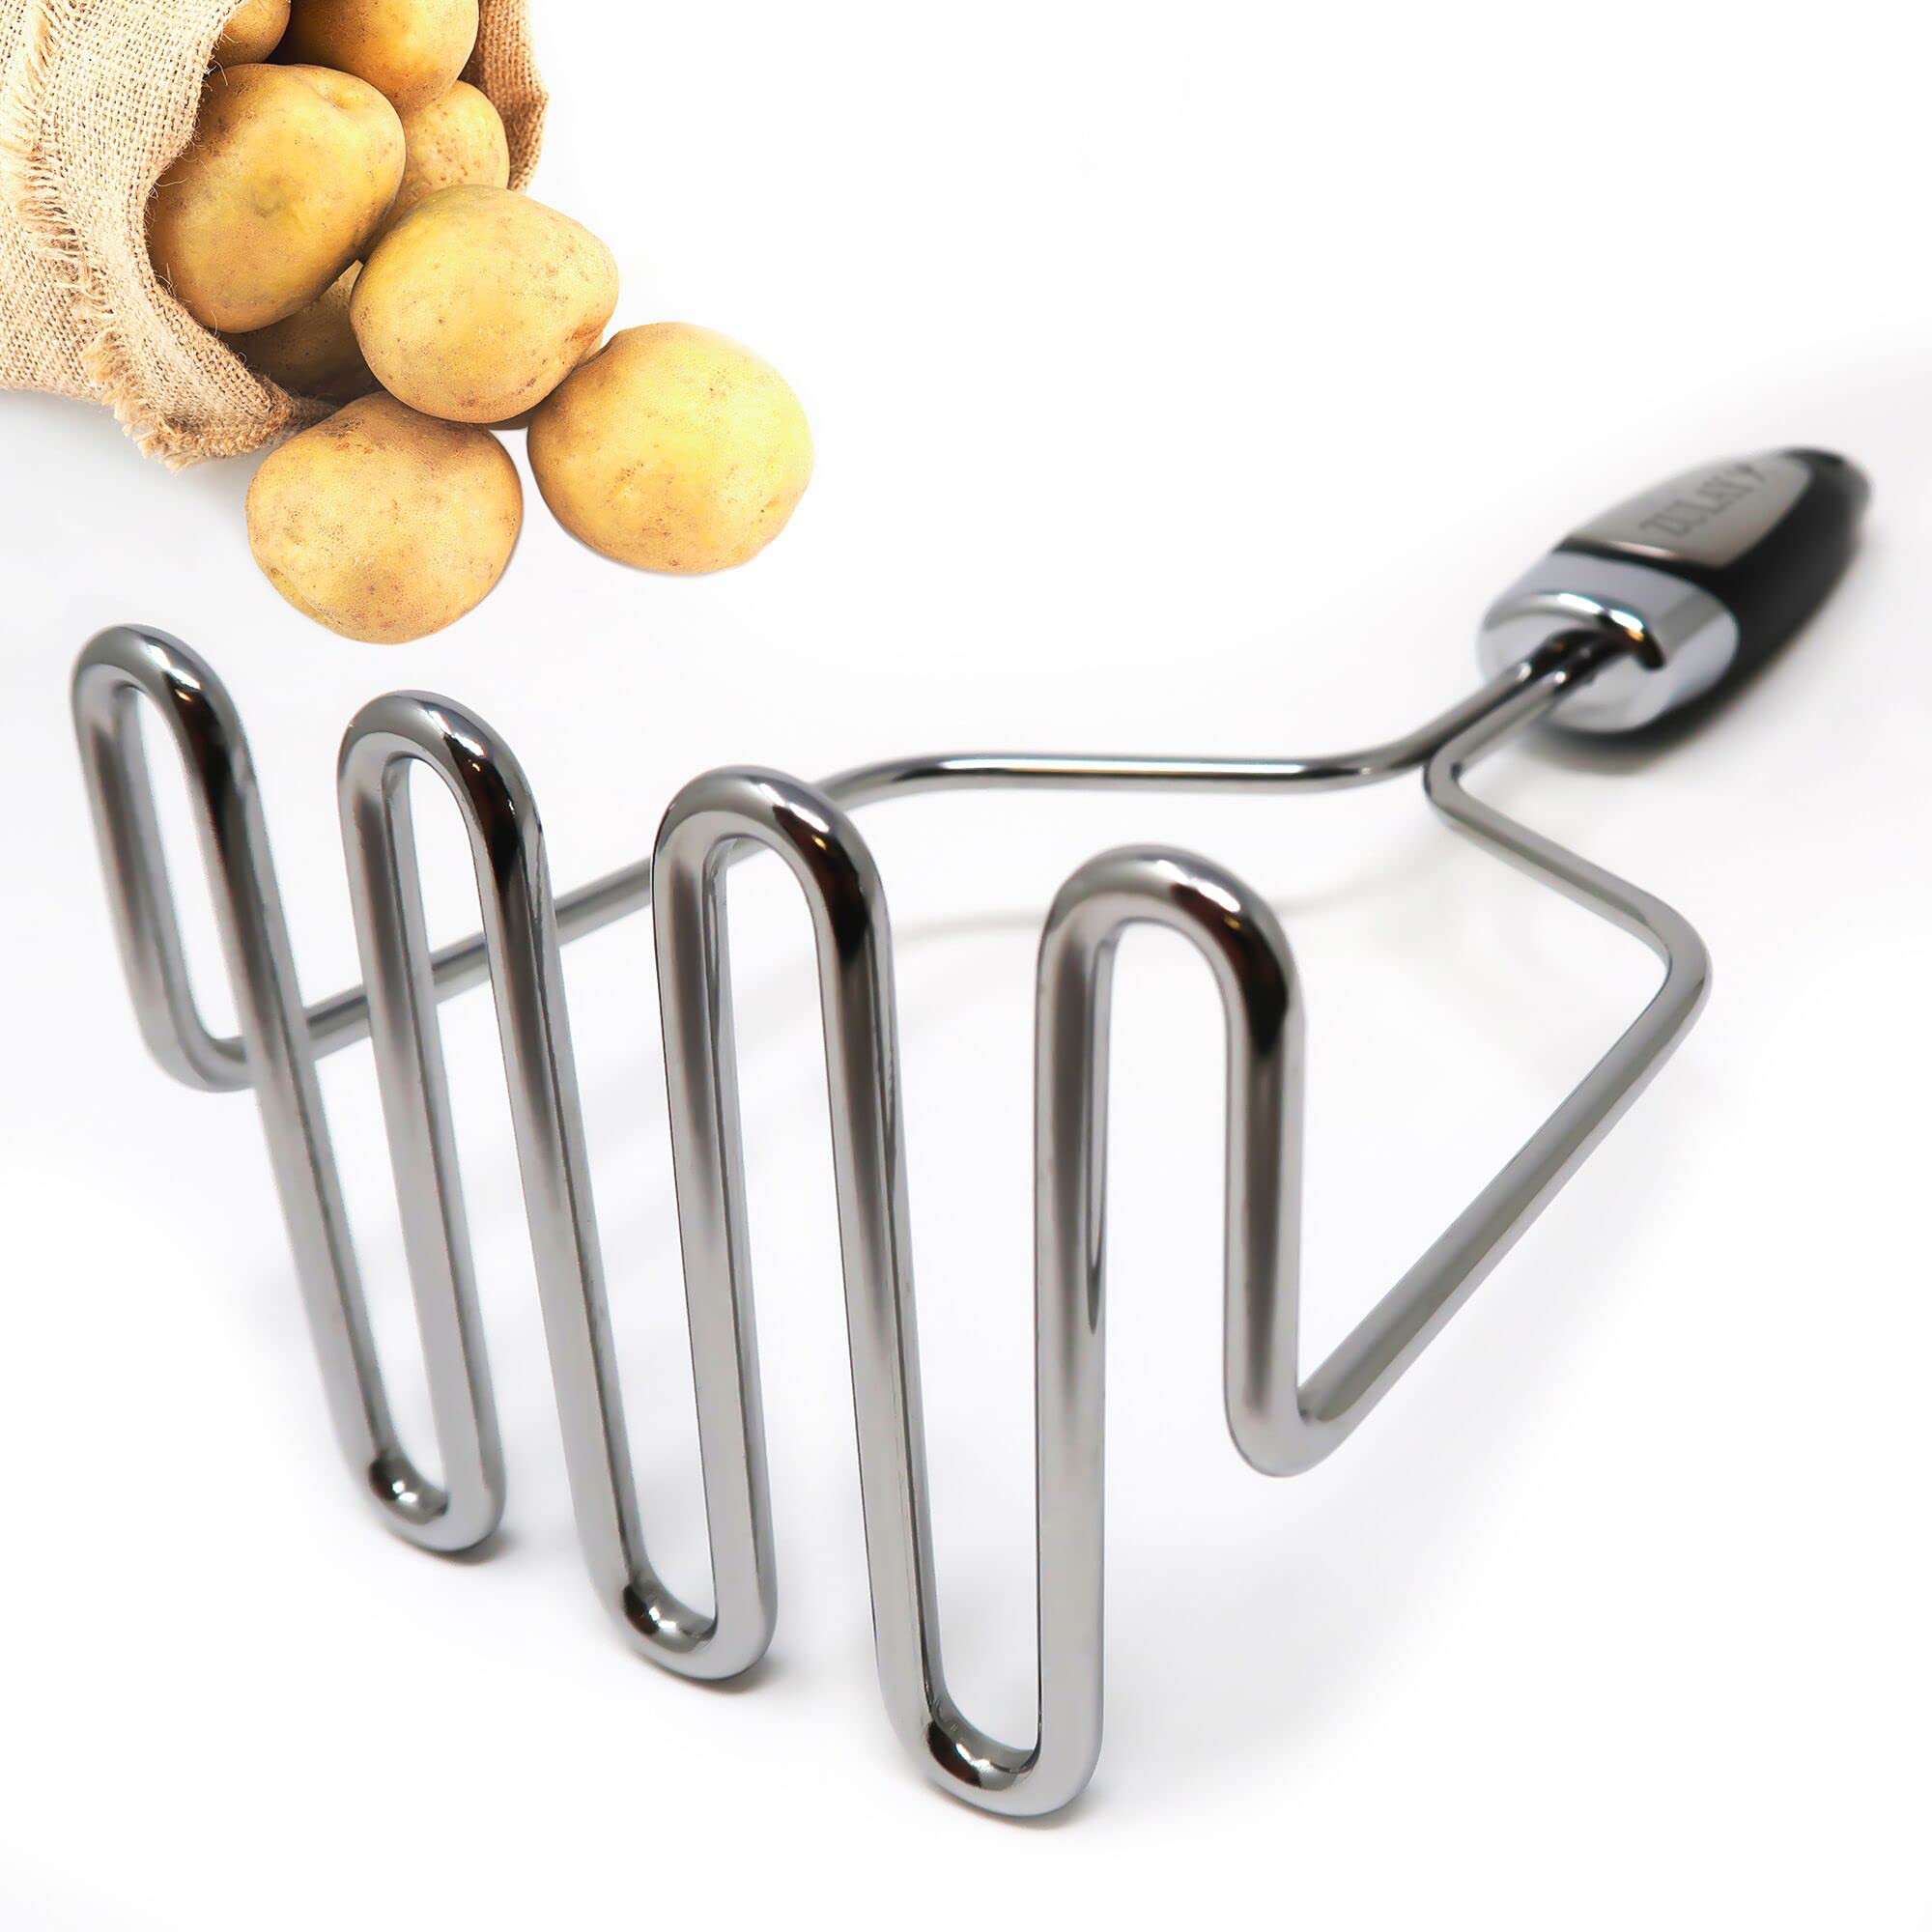 Zulay Kitchen Potato Masher Stainless Steel - Premium Masher Hand Tool and Potato Smasher Metal Wire Utensil for Best Mash for Bean, Avocado, Egg, Mini Mashed Potatoe, Banana & Other Food